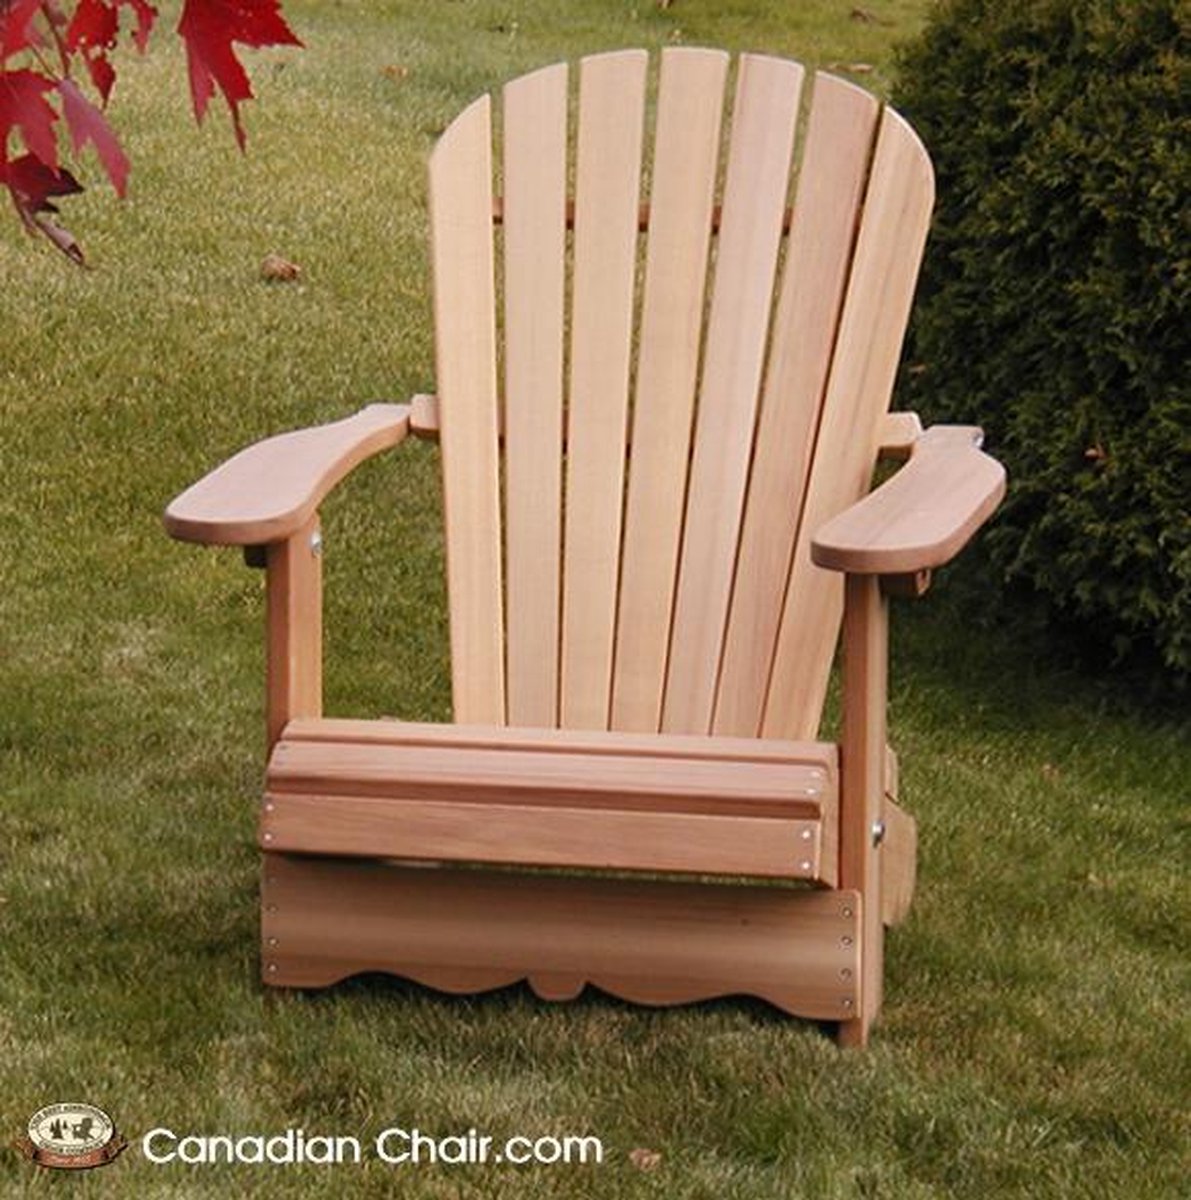 Royal Chair - Canadian - 10 jaar garantie |